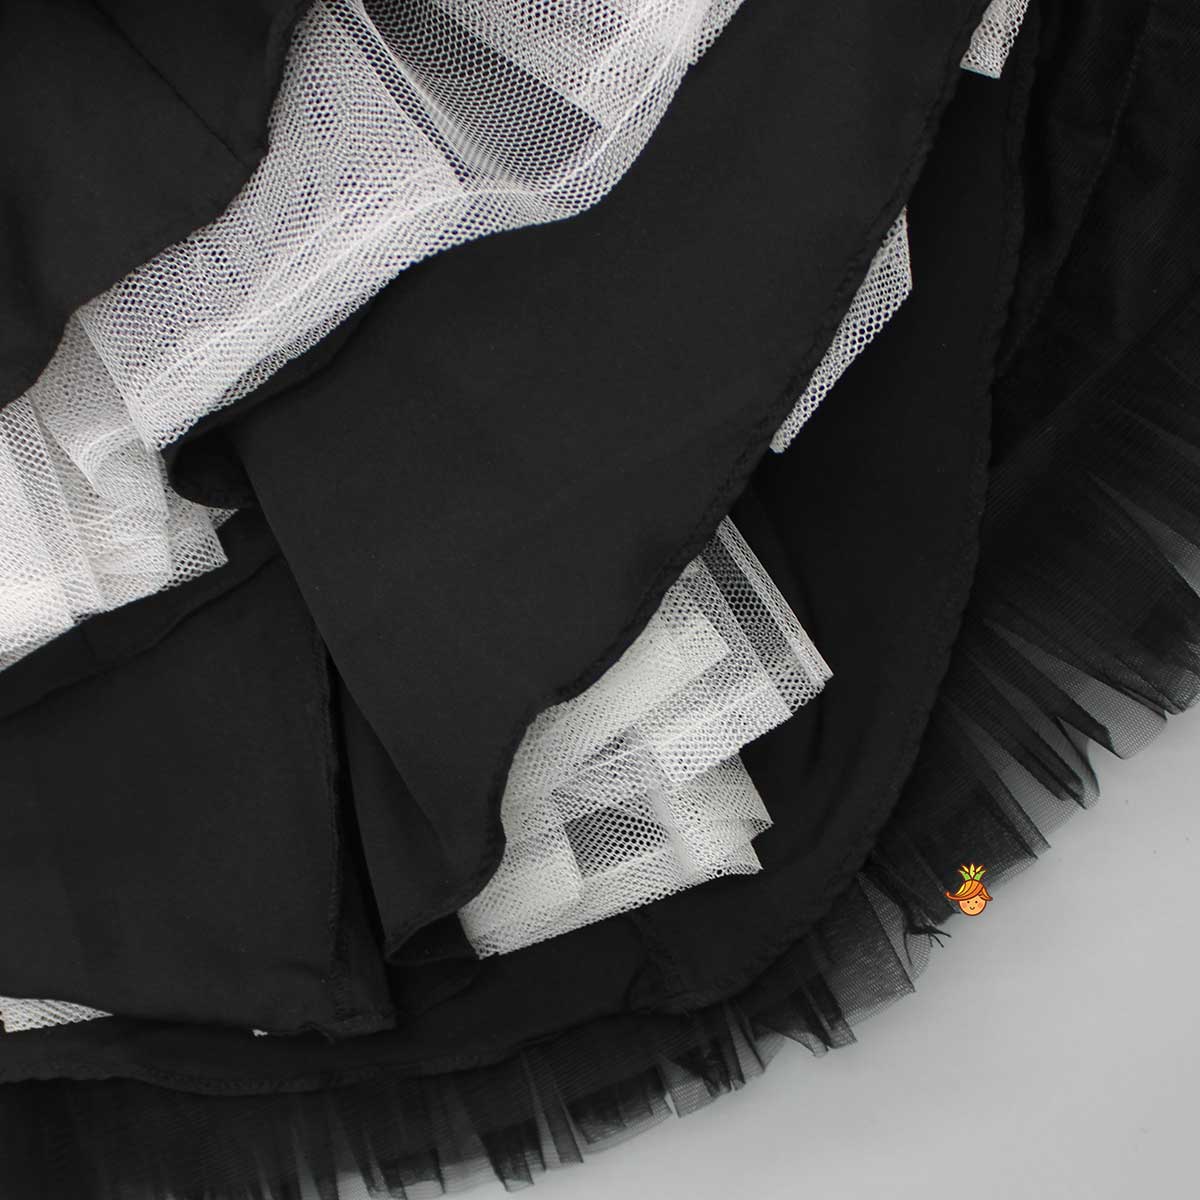 Stylish Black Top With Layered Net Lehenga